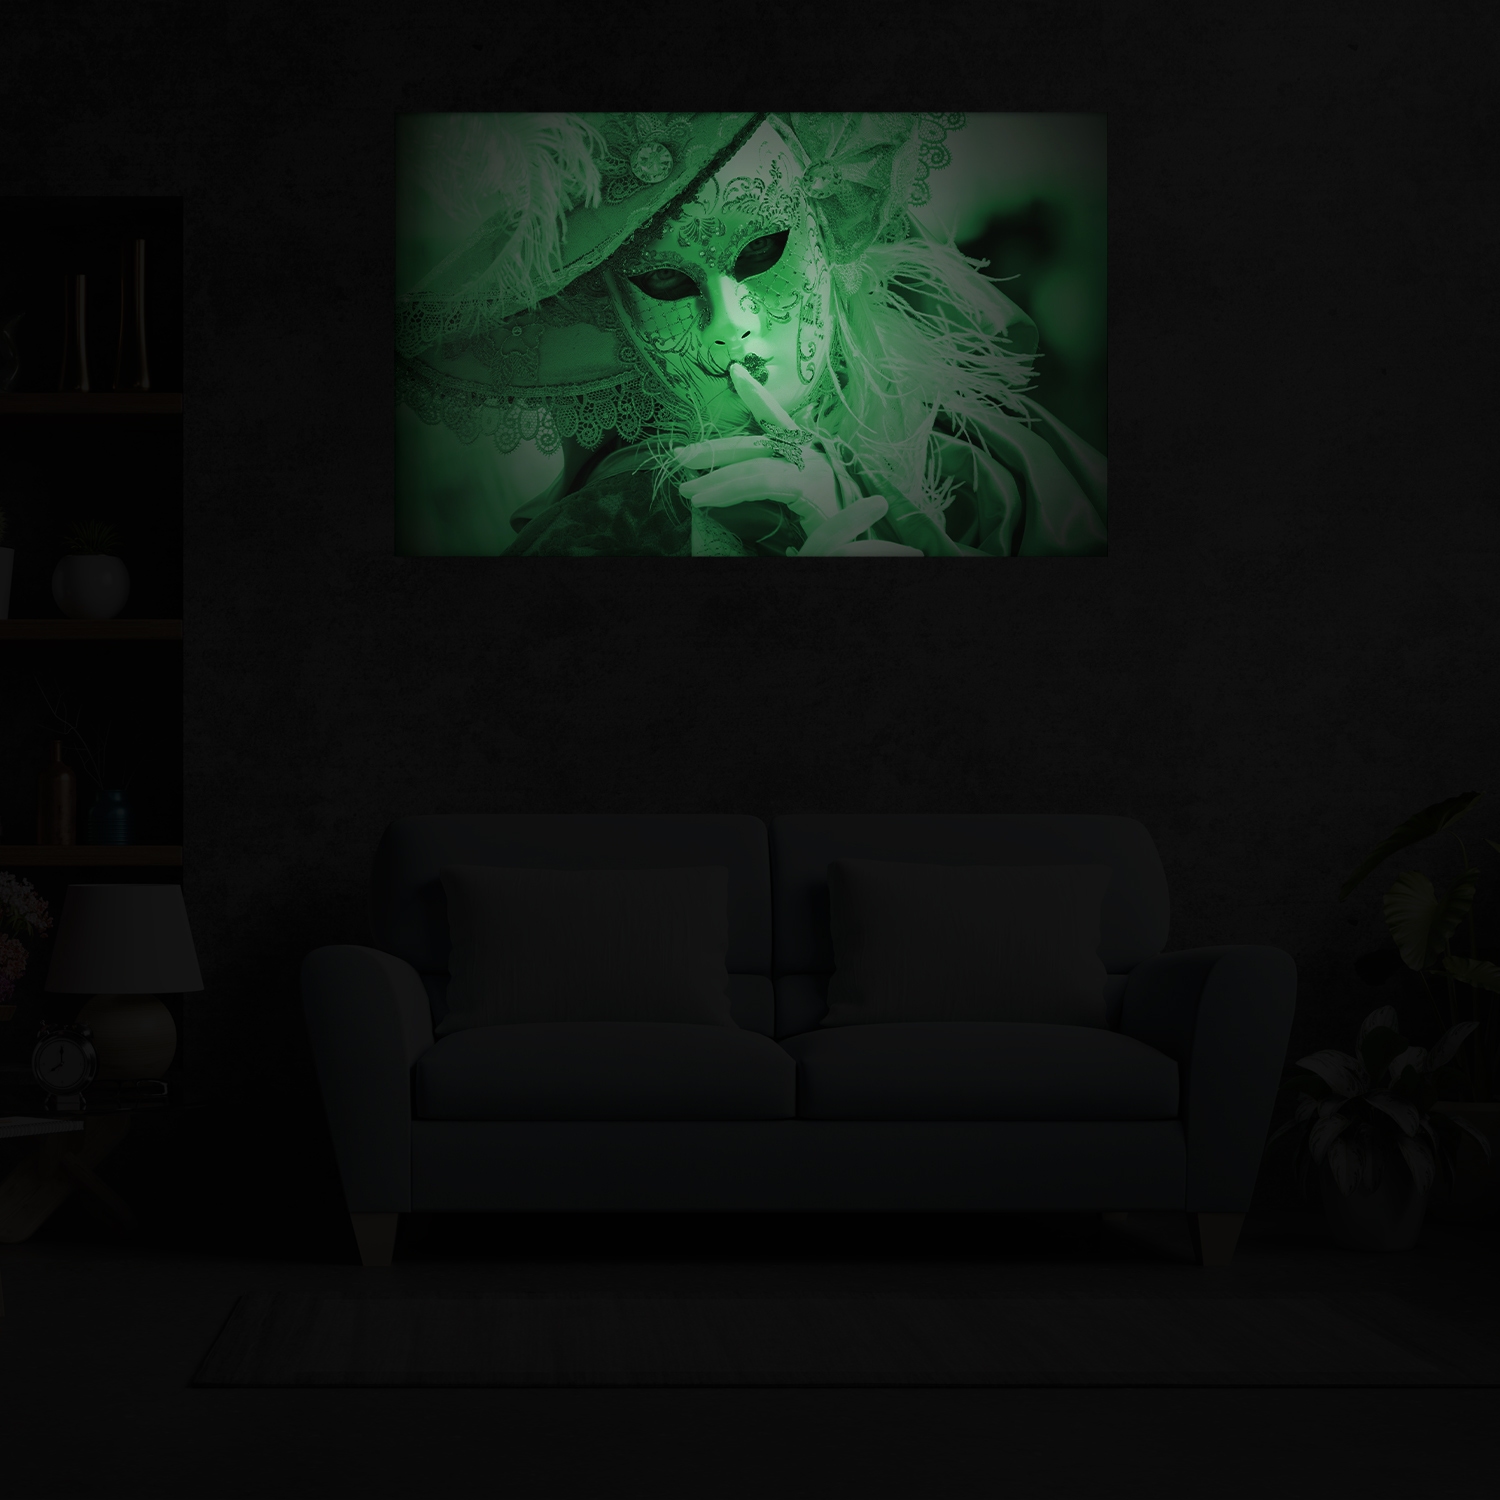 Tablou canvas luminos Masca venetiana 2, Picma, dualview, panza + sasiu lemn, 60 x 90 cm